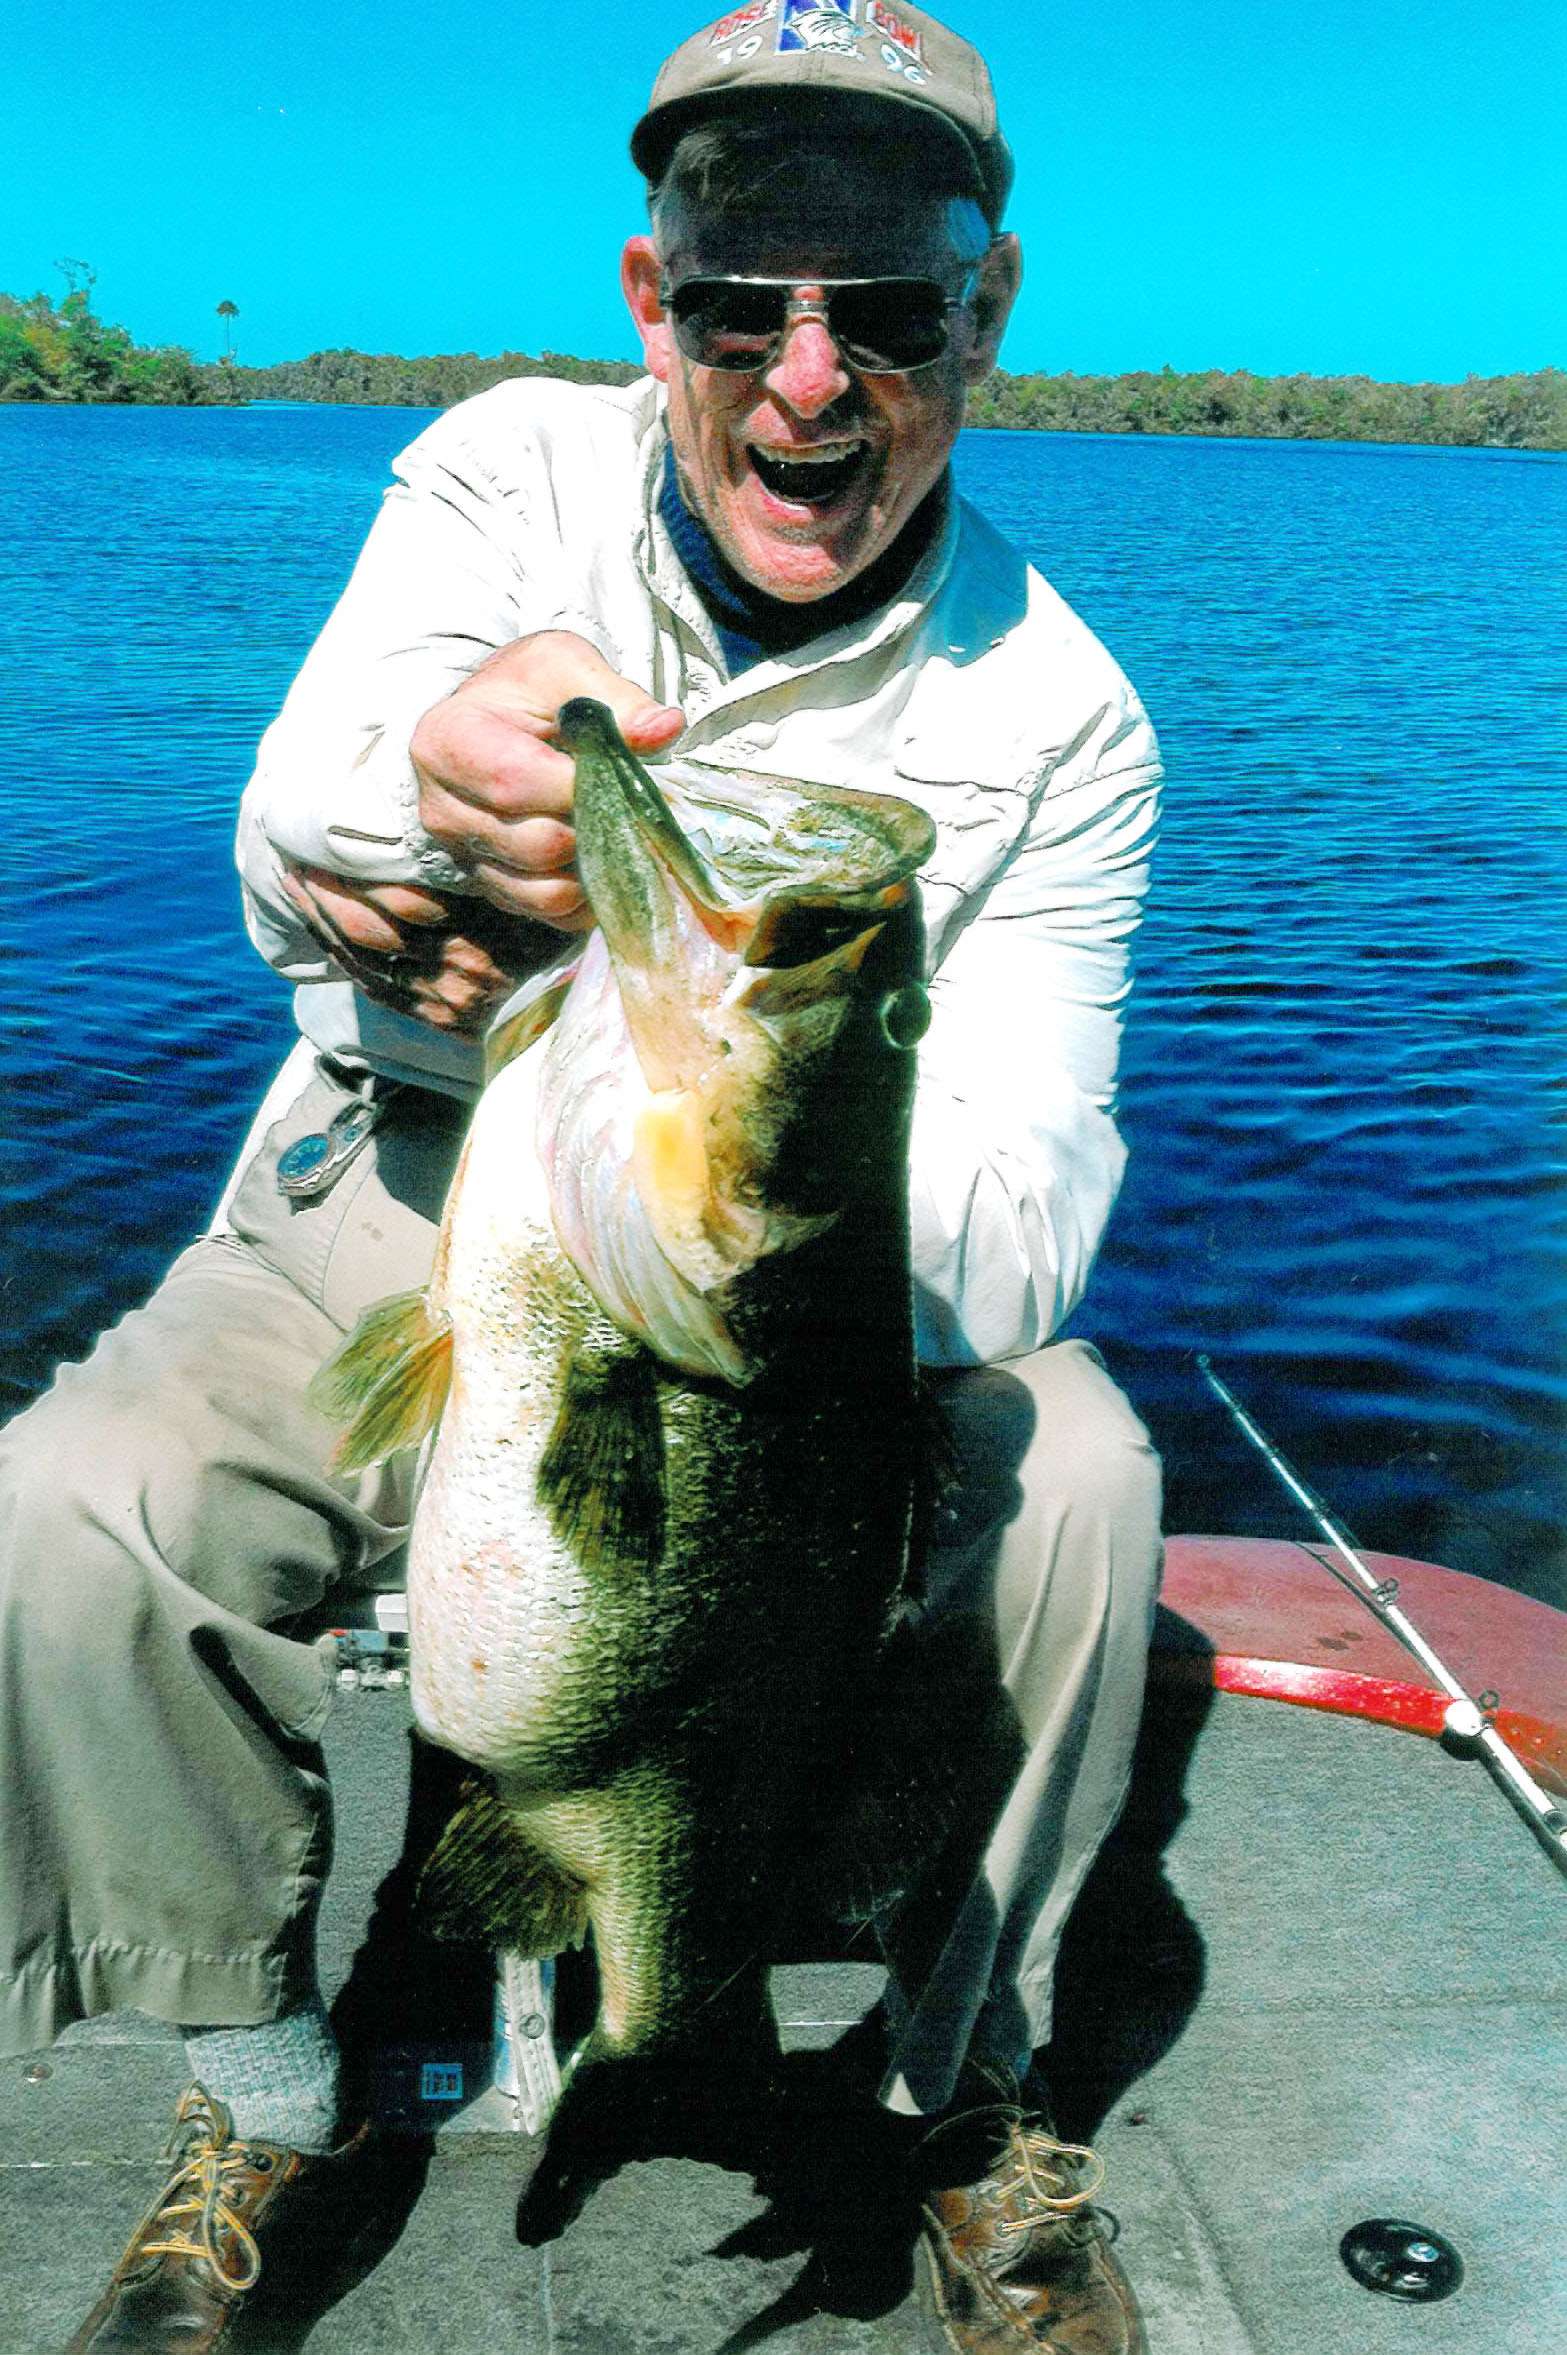 <b>Ed Bryant</b>
<br>Illinois
<br>12-3
<br>St. Johns River, Florida
<br>9-inch shiner, size 5/0 hook with bobber